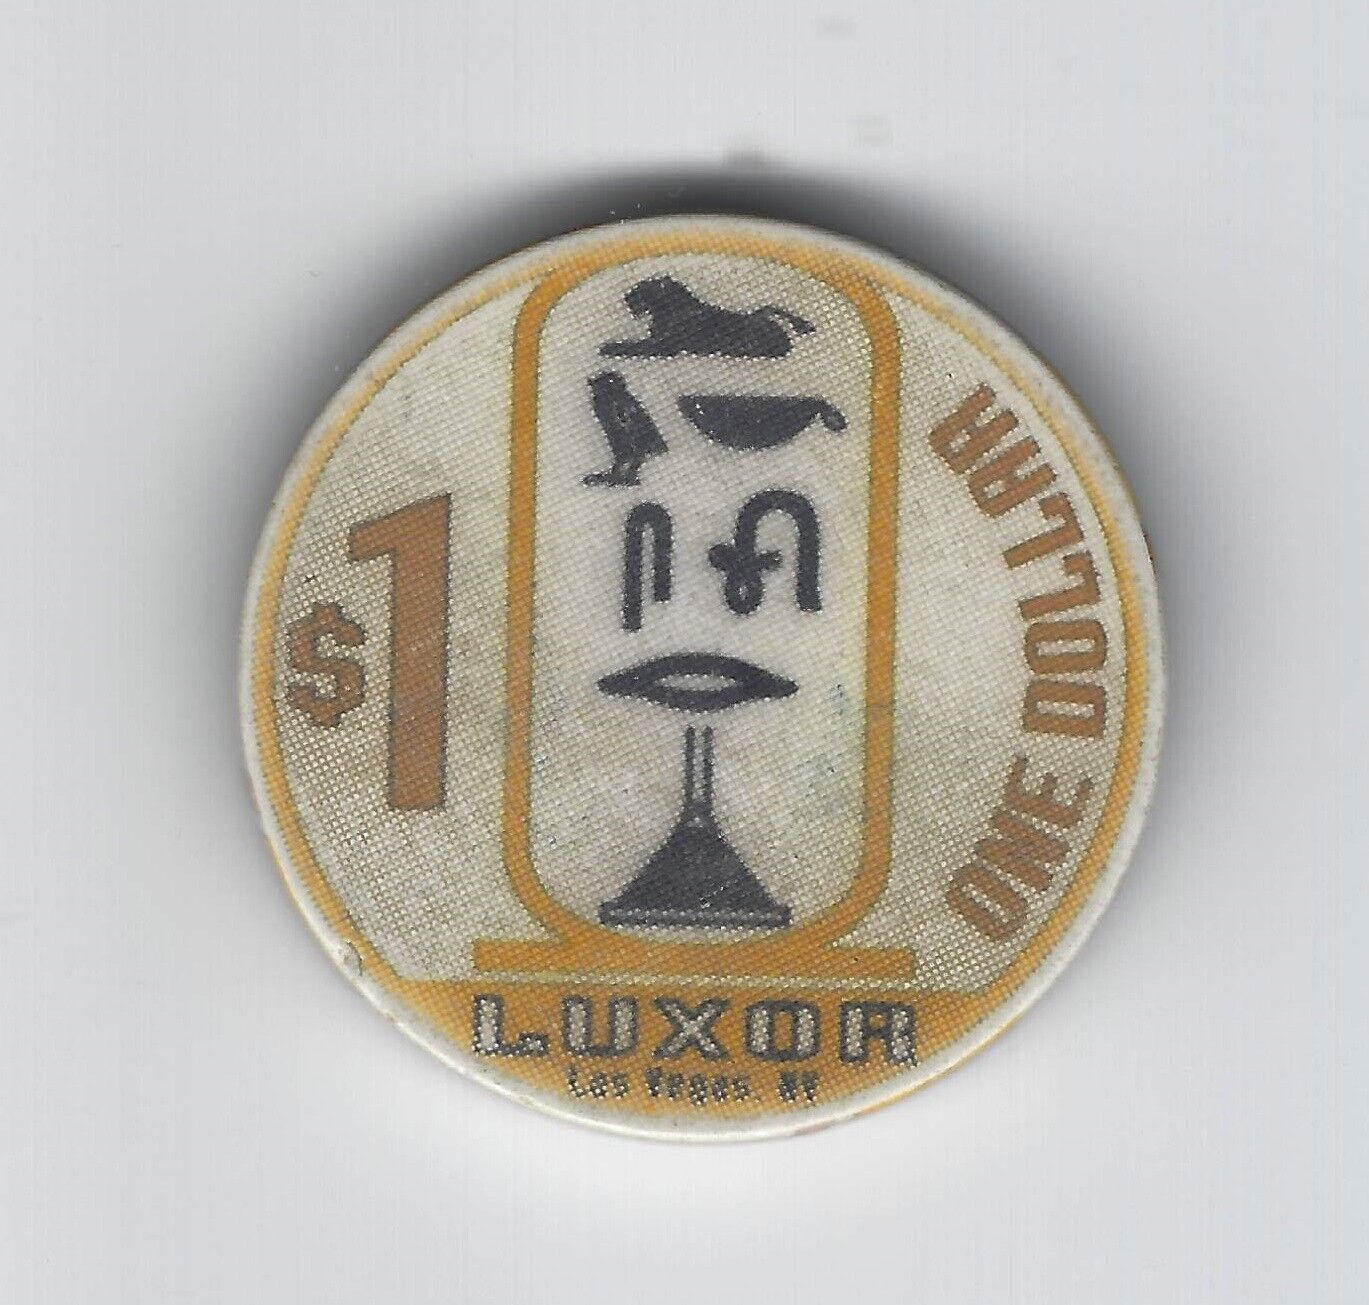 Luxor $1 Las Vegas, Nevada Gaming Poker Casino Chip Free US shipping